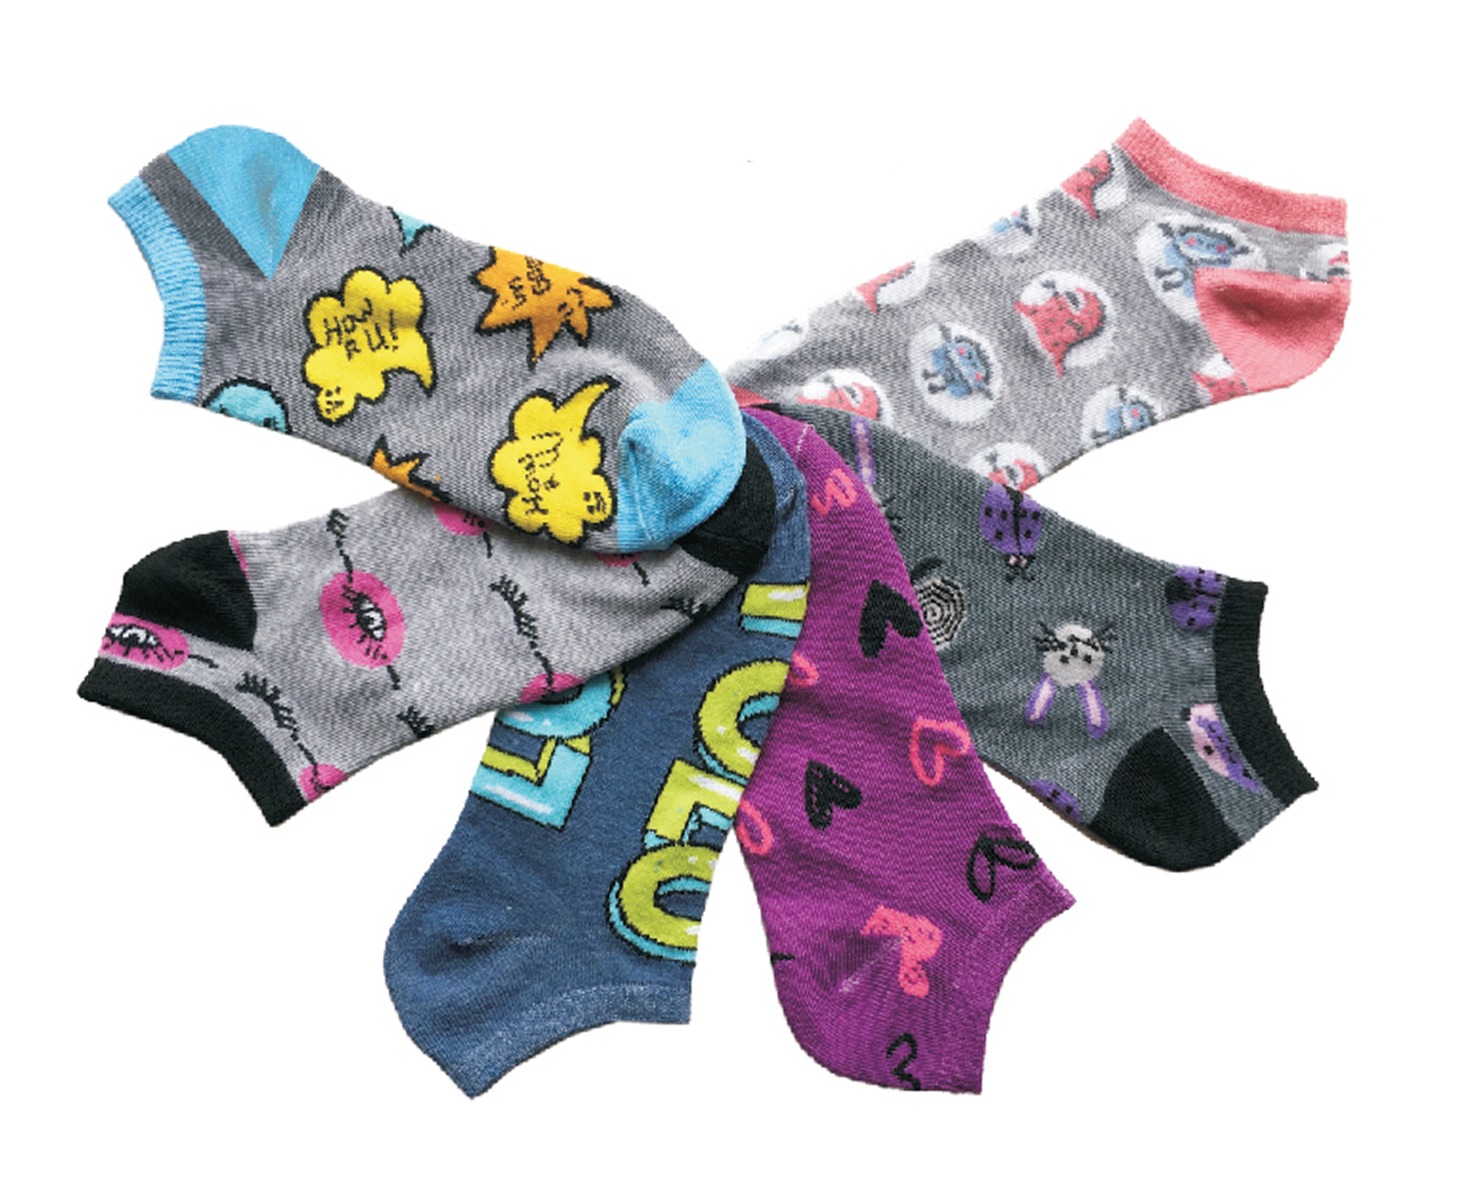 Women's Low Cut Novelty Socks - Pop Art Print - Size 9-11 - 6-Pair Packs